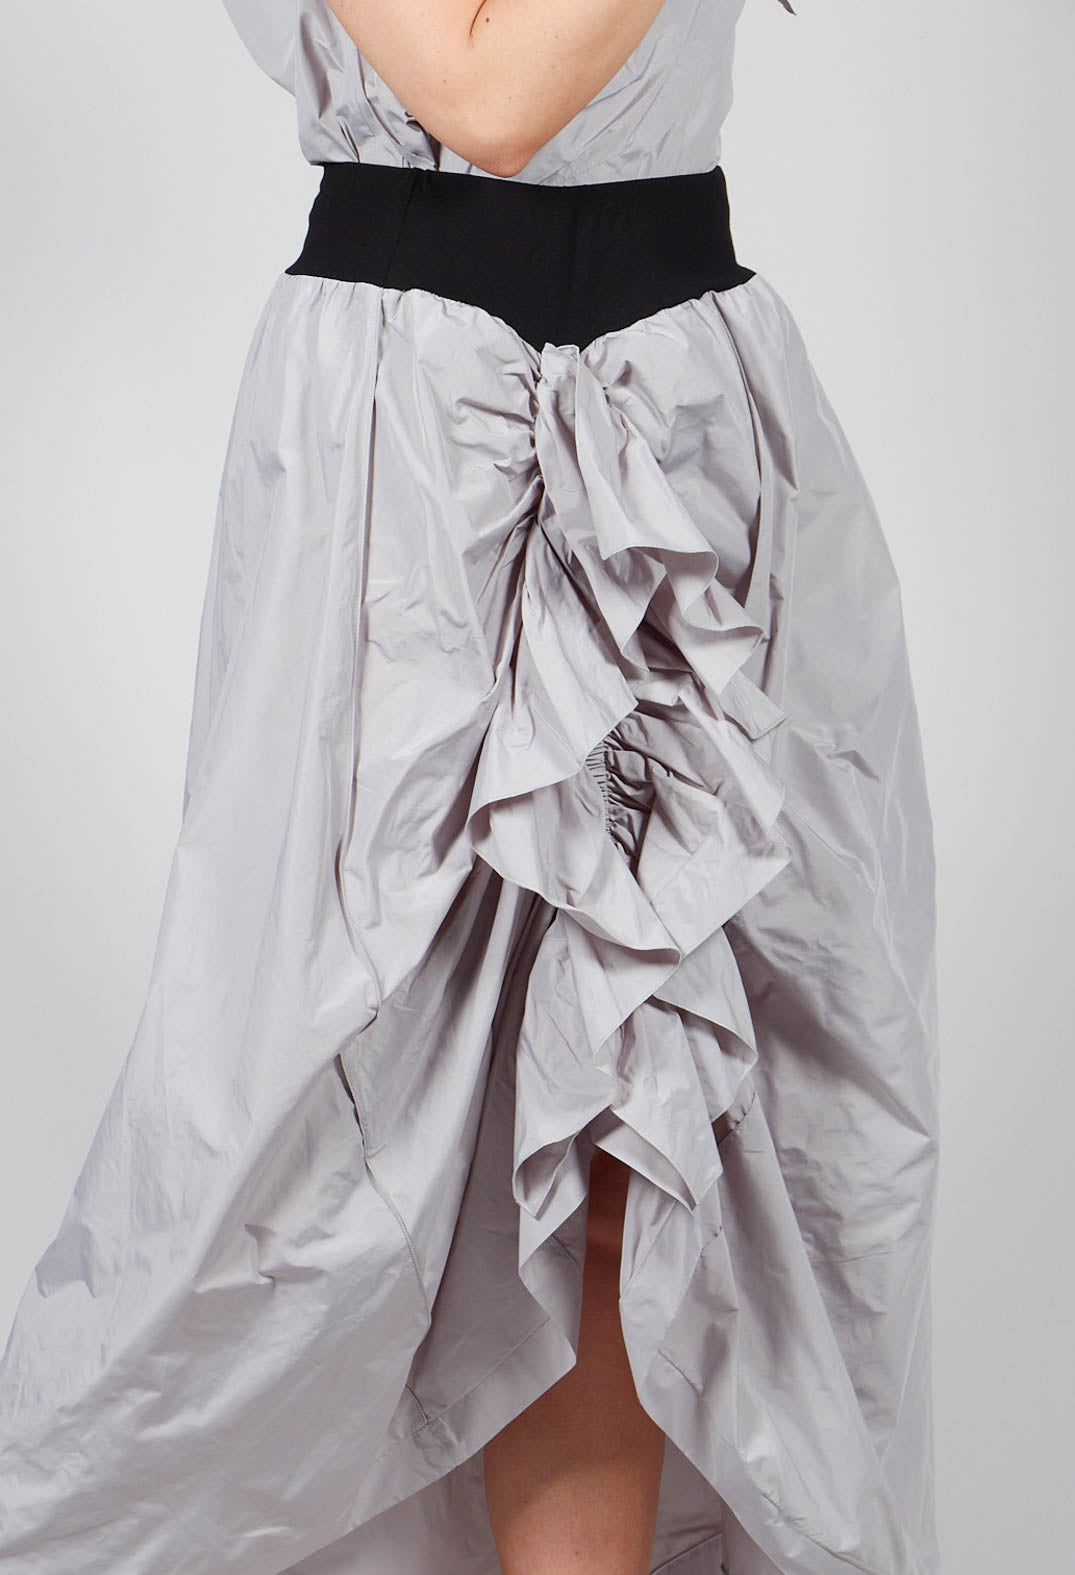 ORDI Skirt in Black Light Grey